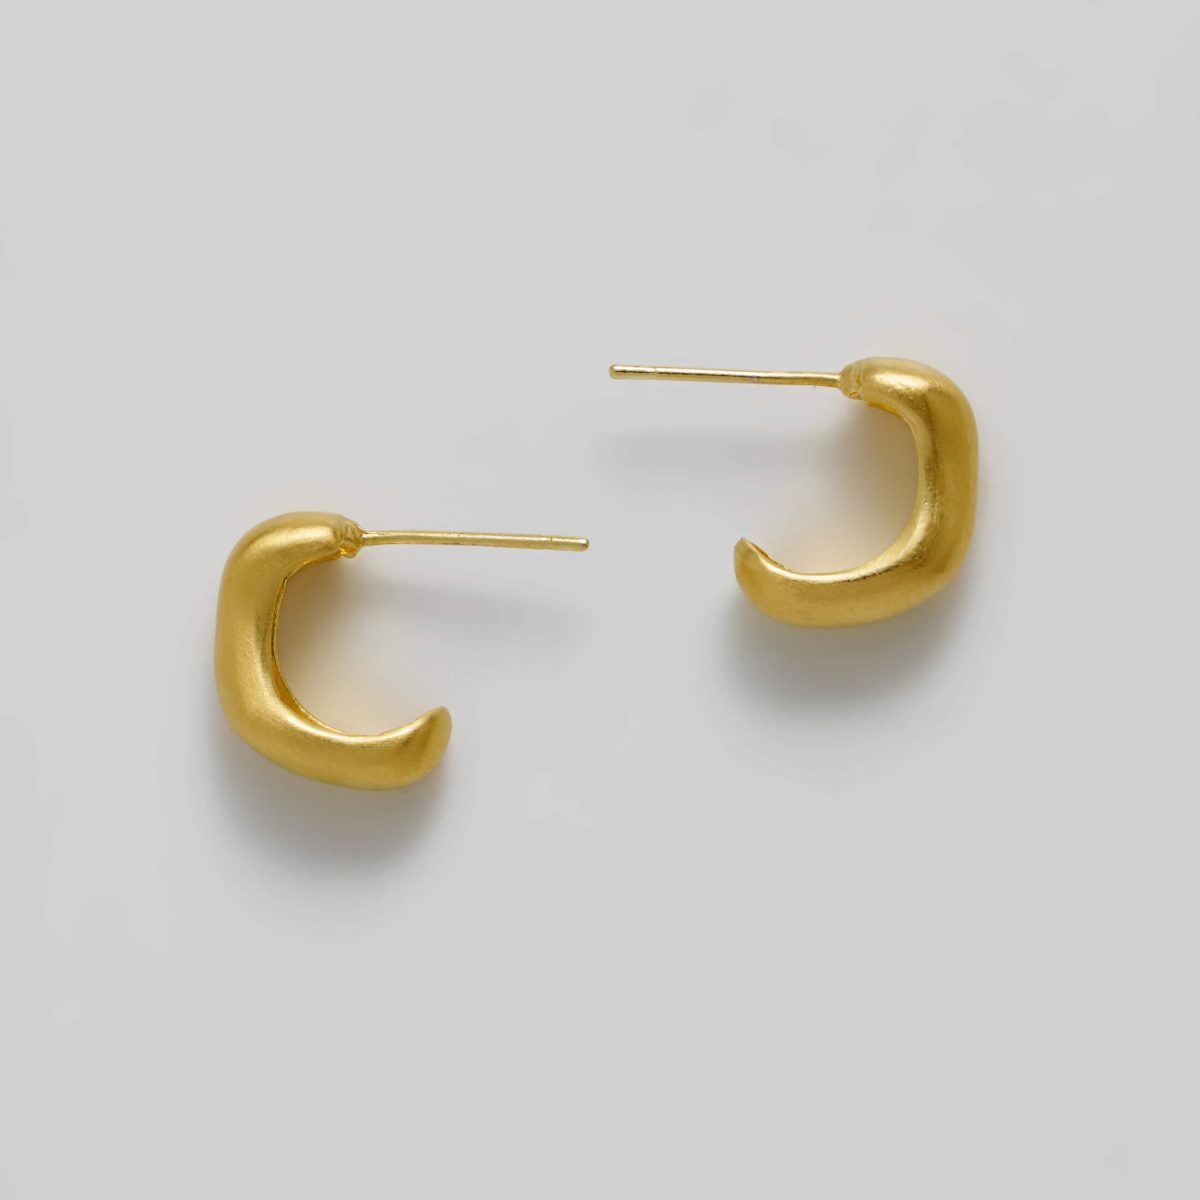 Gold Plot Twist Earrings by Xoutou's